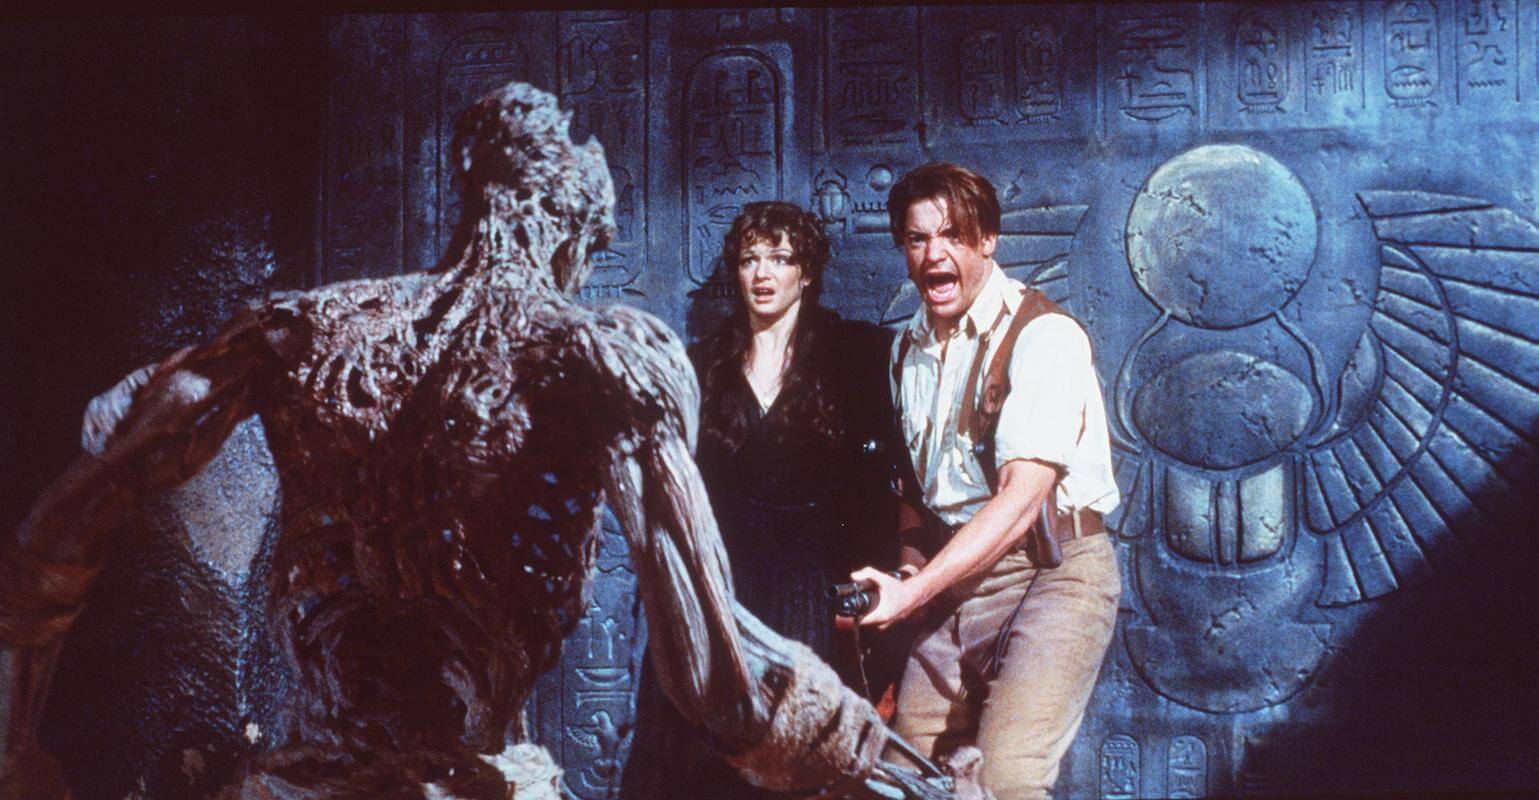 Brendan Fraser screams at the mummy